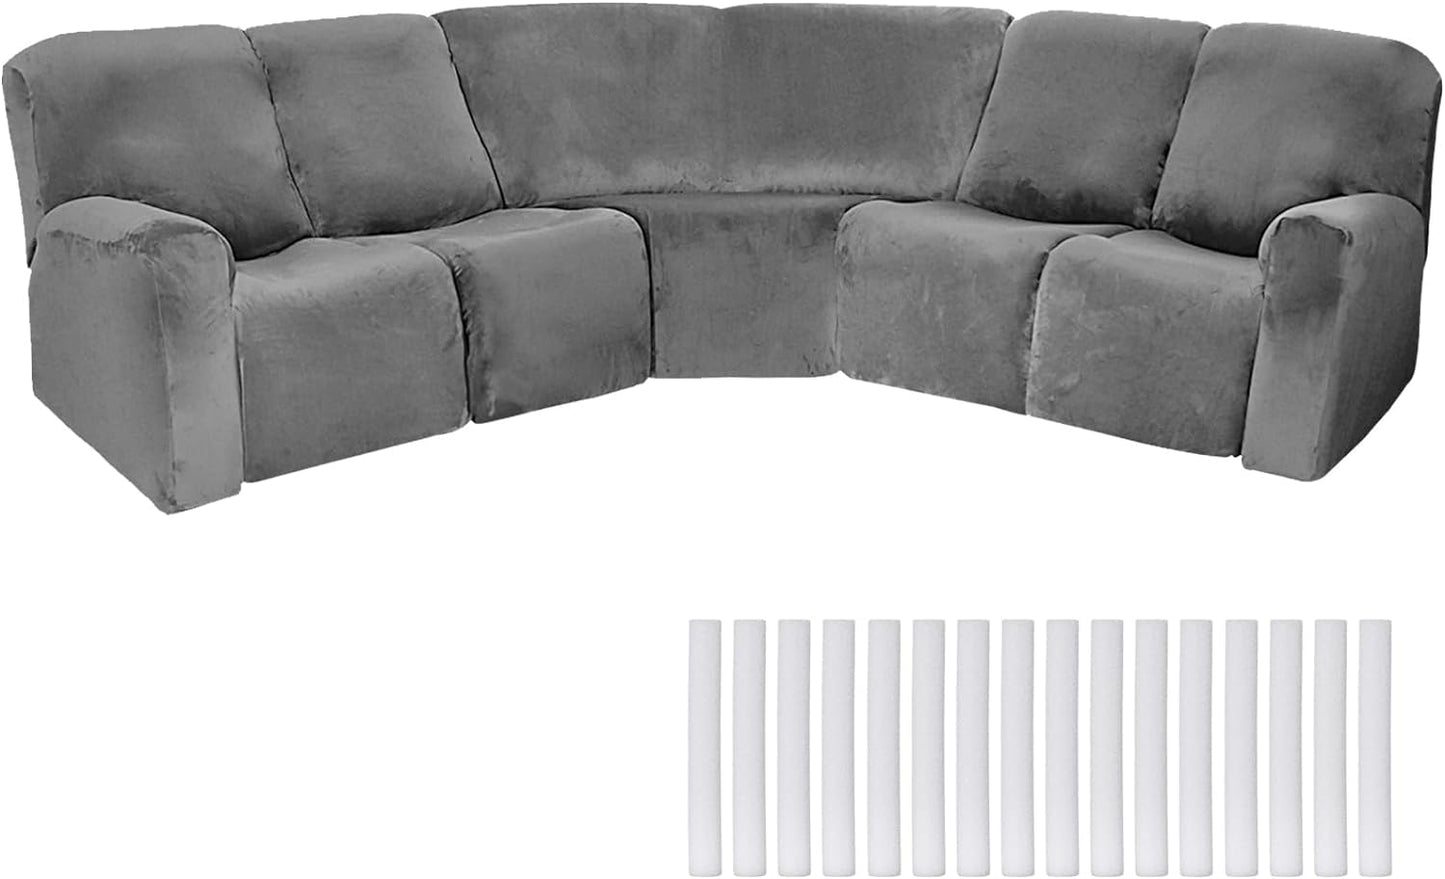 7 Pcs L Shape Sectional Recliner Sofa Covers